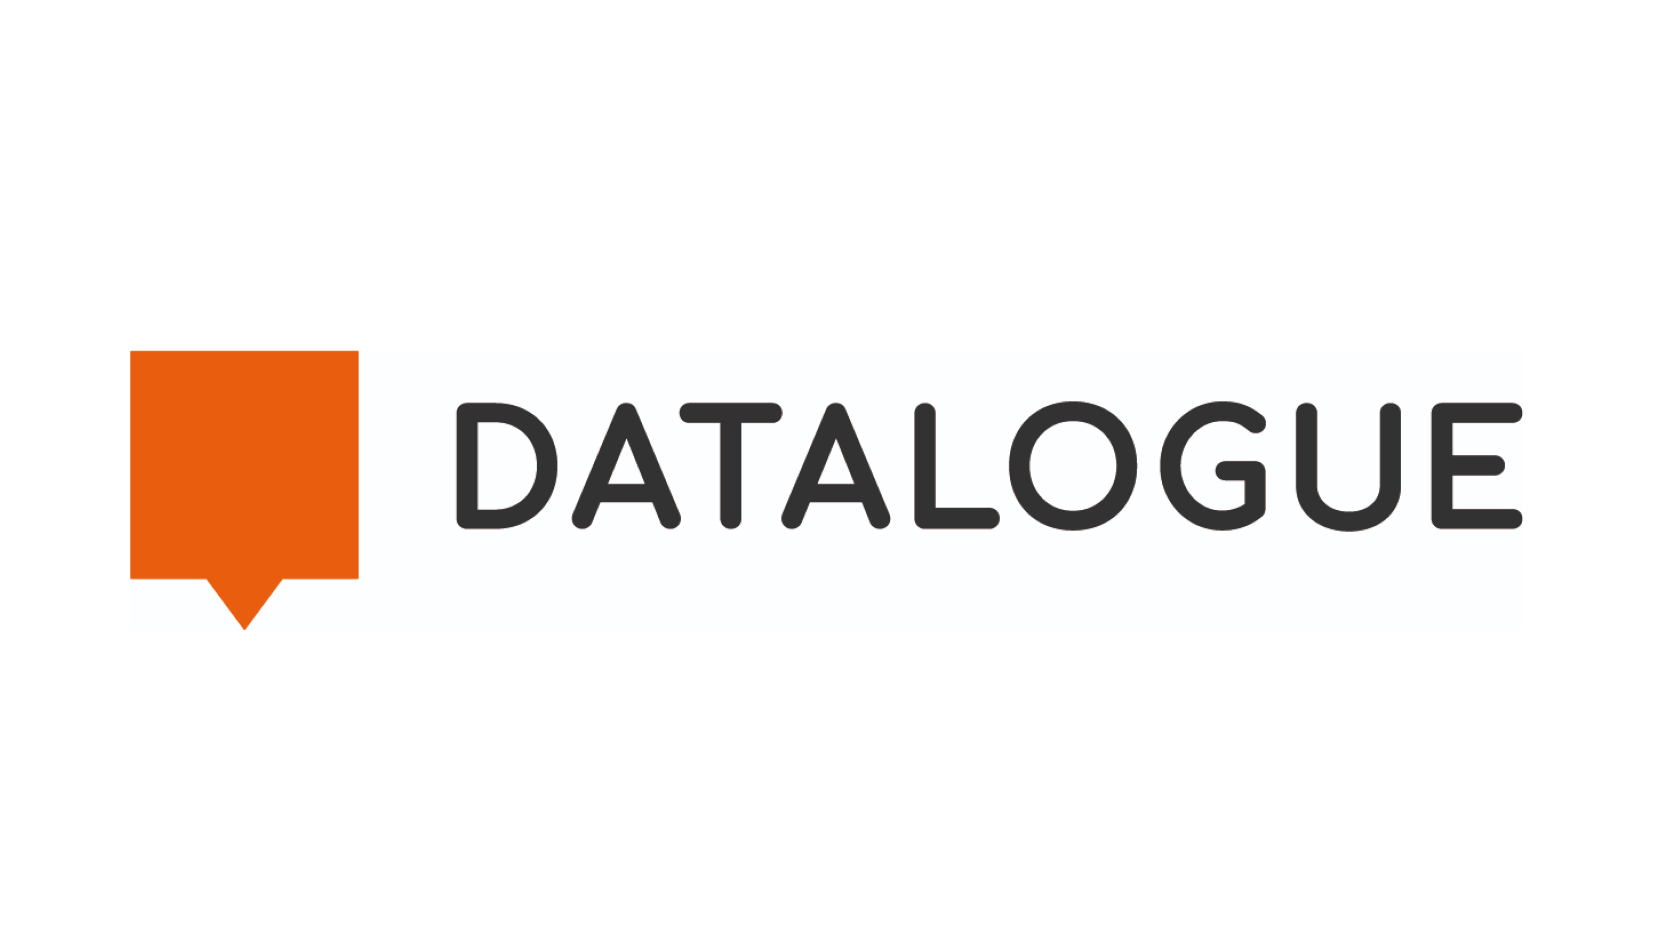 Tech & Product DD | Acquisition | Code & Co. advises Ufenau Capital Partners on Datalogue